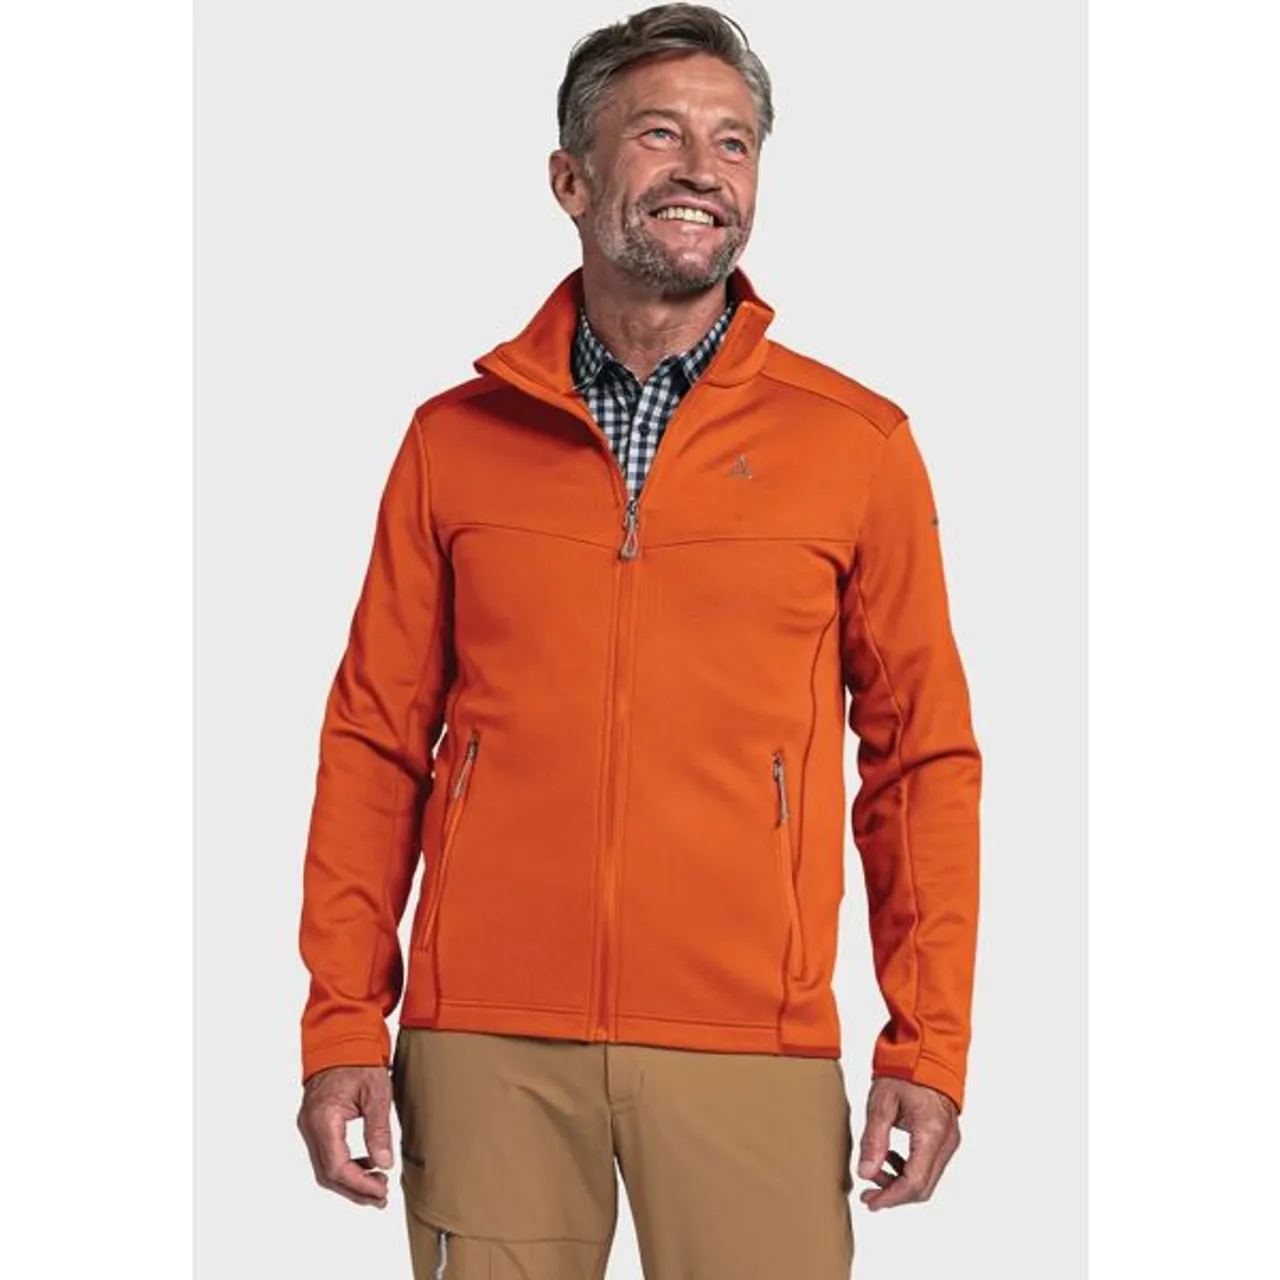 Fleecejacke SCHÖFFEL "Fleece Jacket Bleckwand M" Gr. 54, orange (5480, orange) Herren Jacken Outdoorjacken